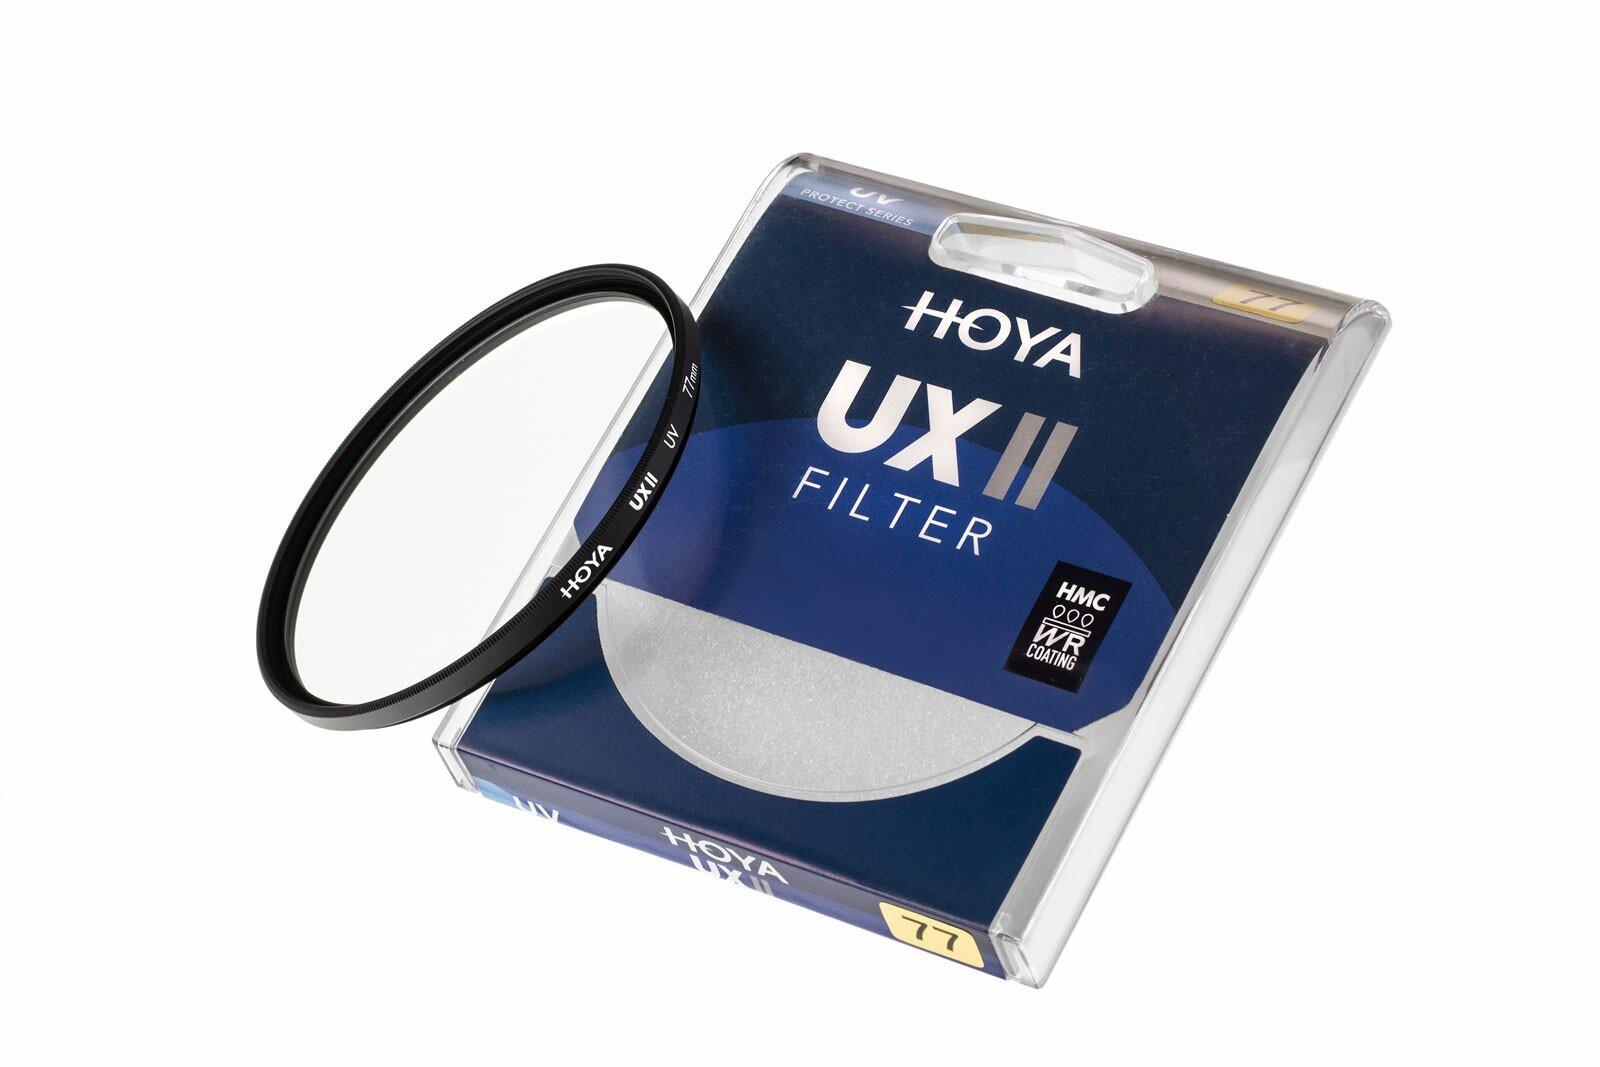 Hoya  Hoya UX II UV Ultraviolett (UV)-Kamerafilter 7,7 cm 